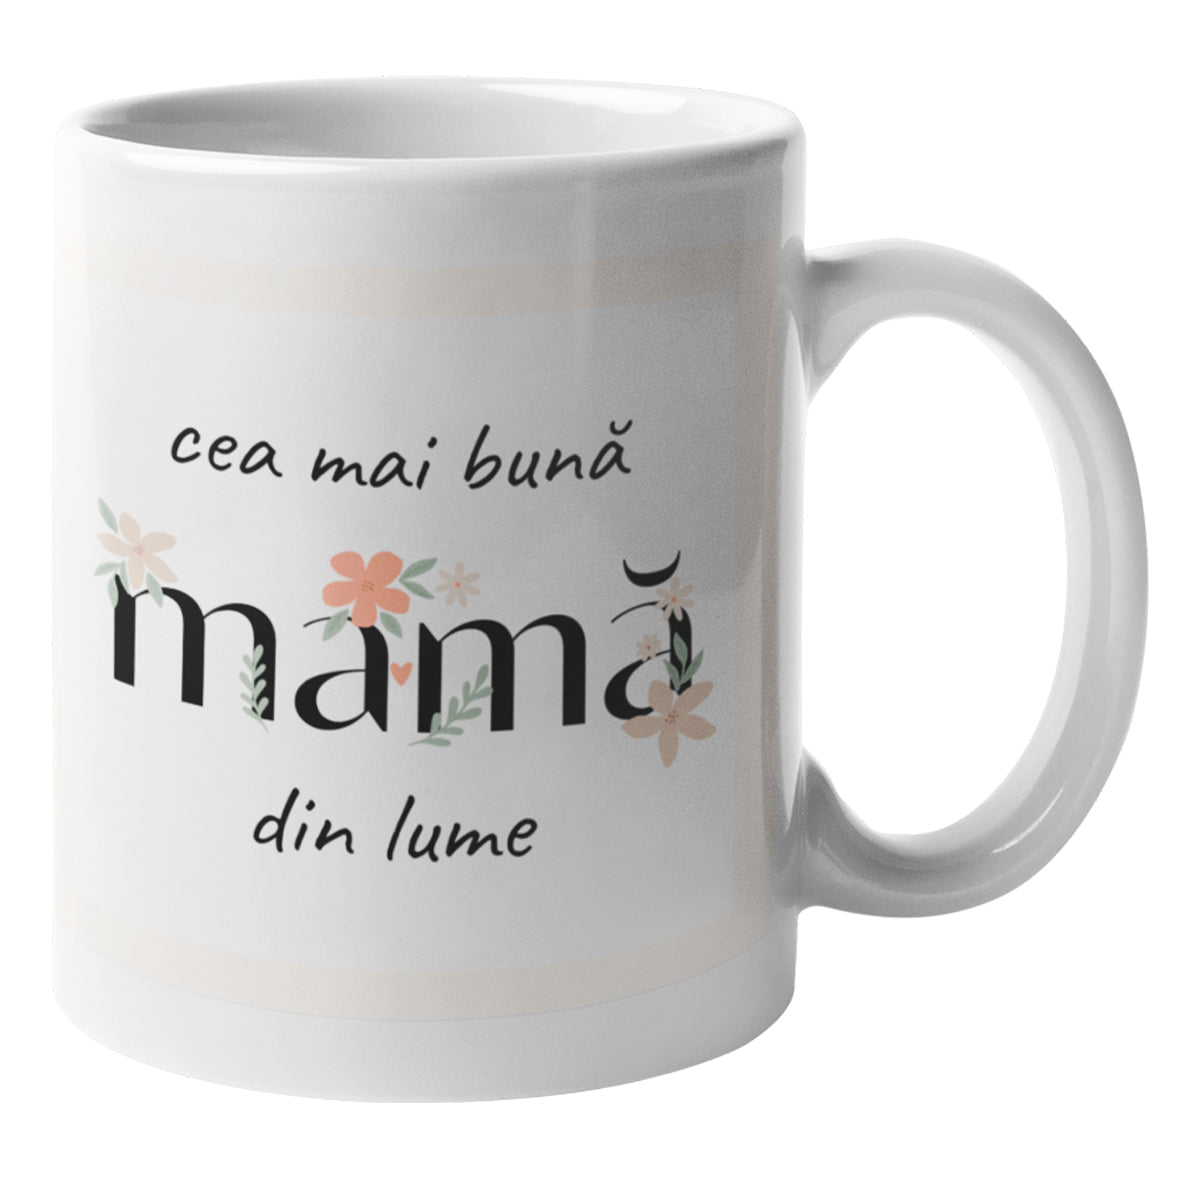 Cadou Pentru Mama: Cana Ceramica, 330 ml, Printata Cu Mesaj "Cea Mai Buna Mama Din Lume"